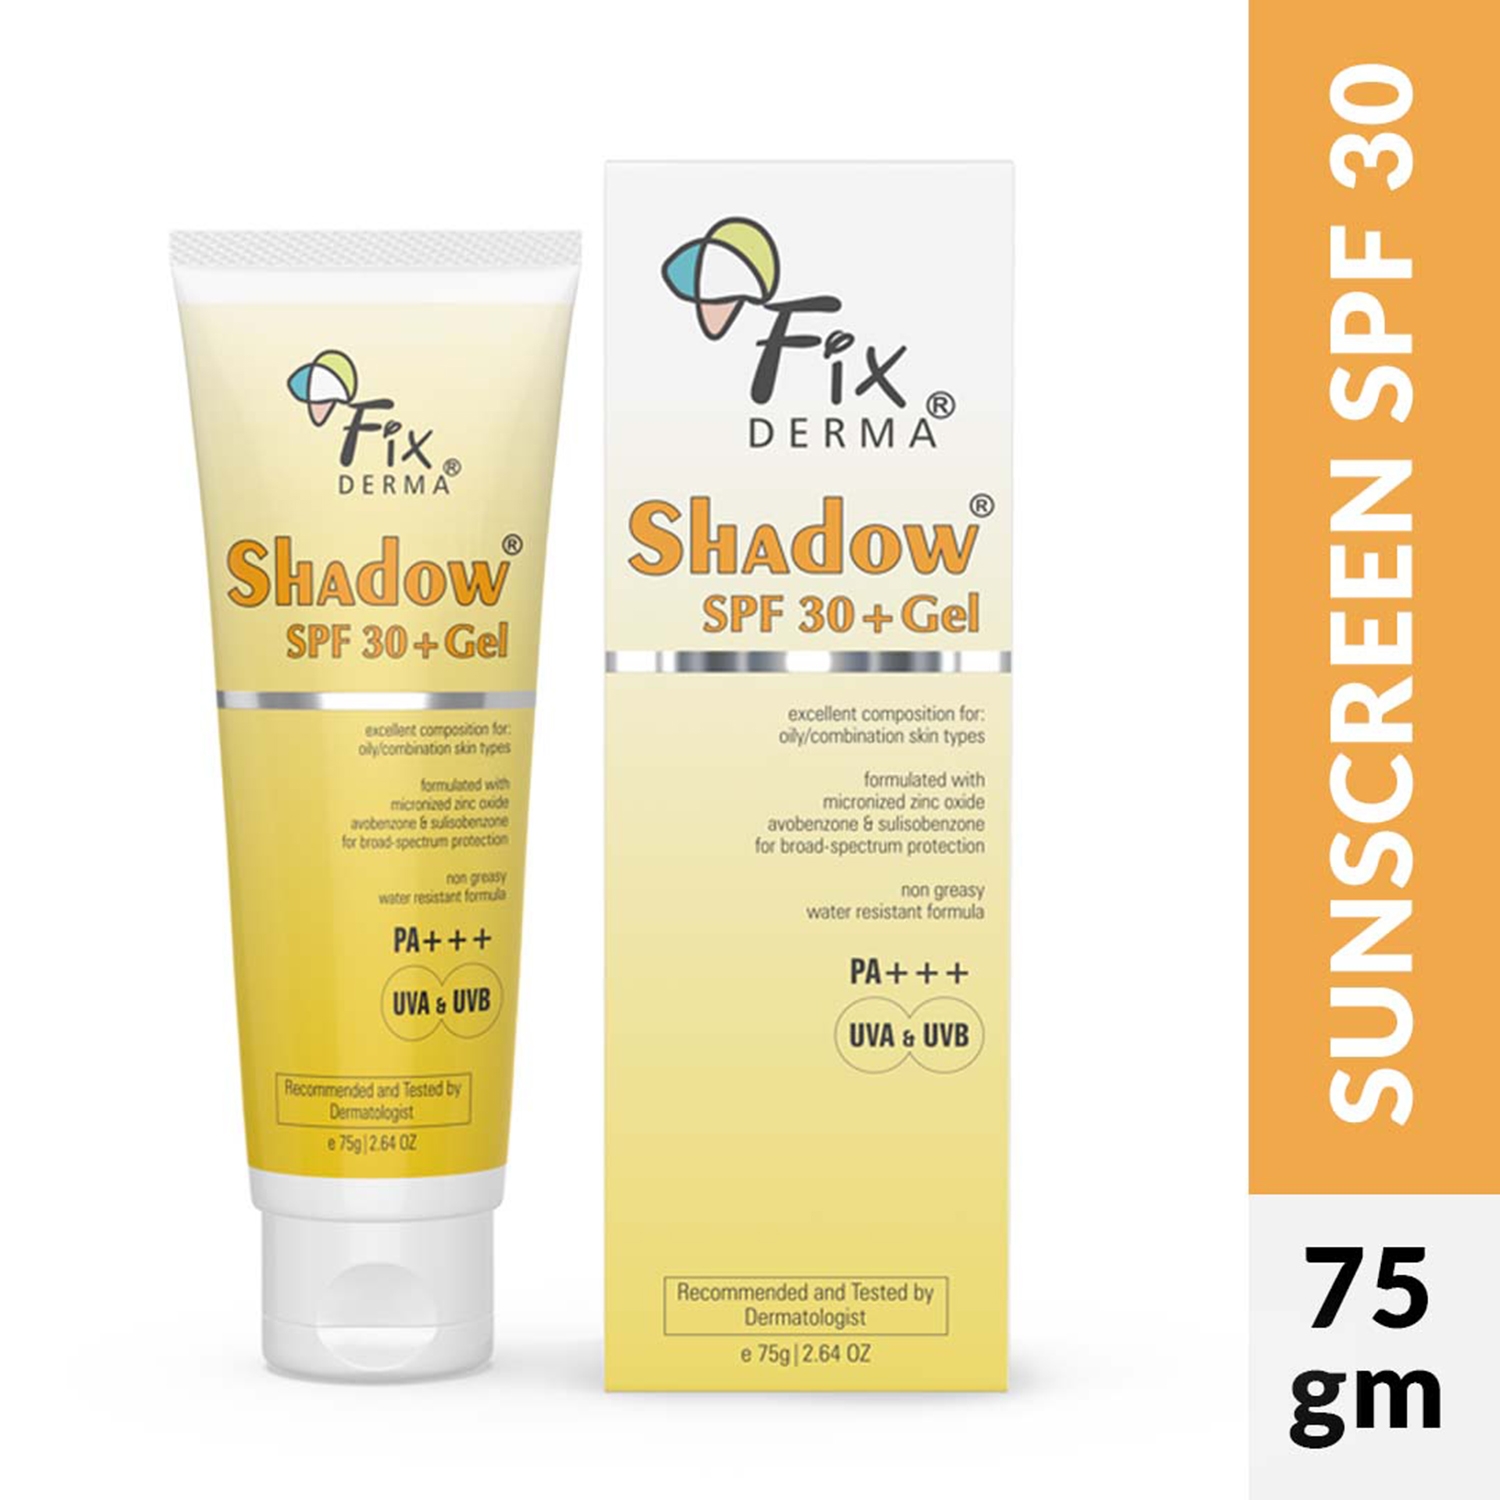 Fixderma | Fixderma Shadow SPF 30+ Gel - (75g)